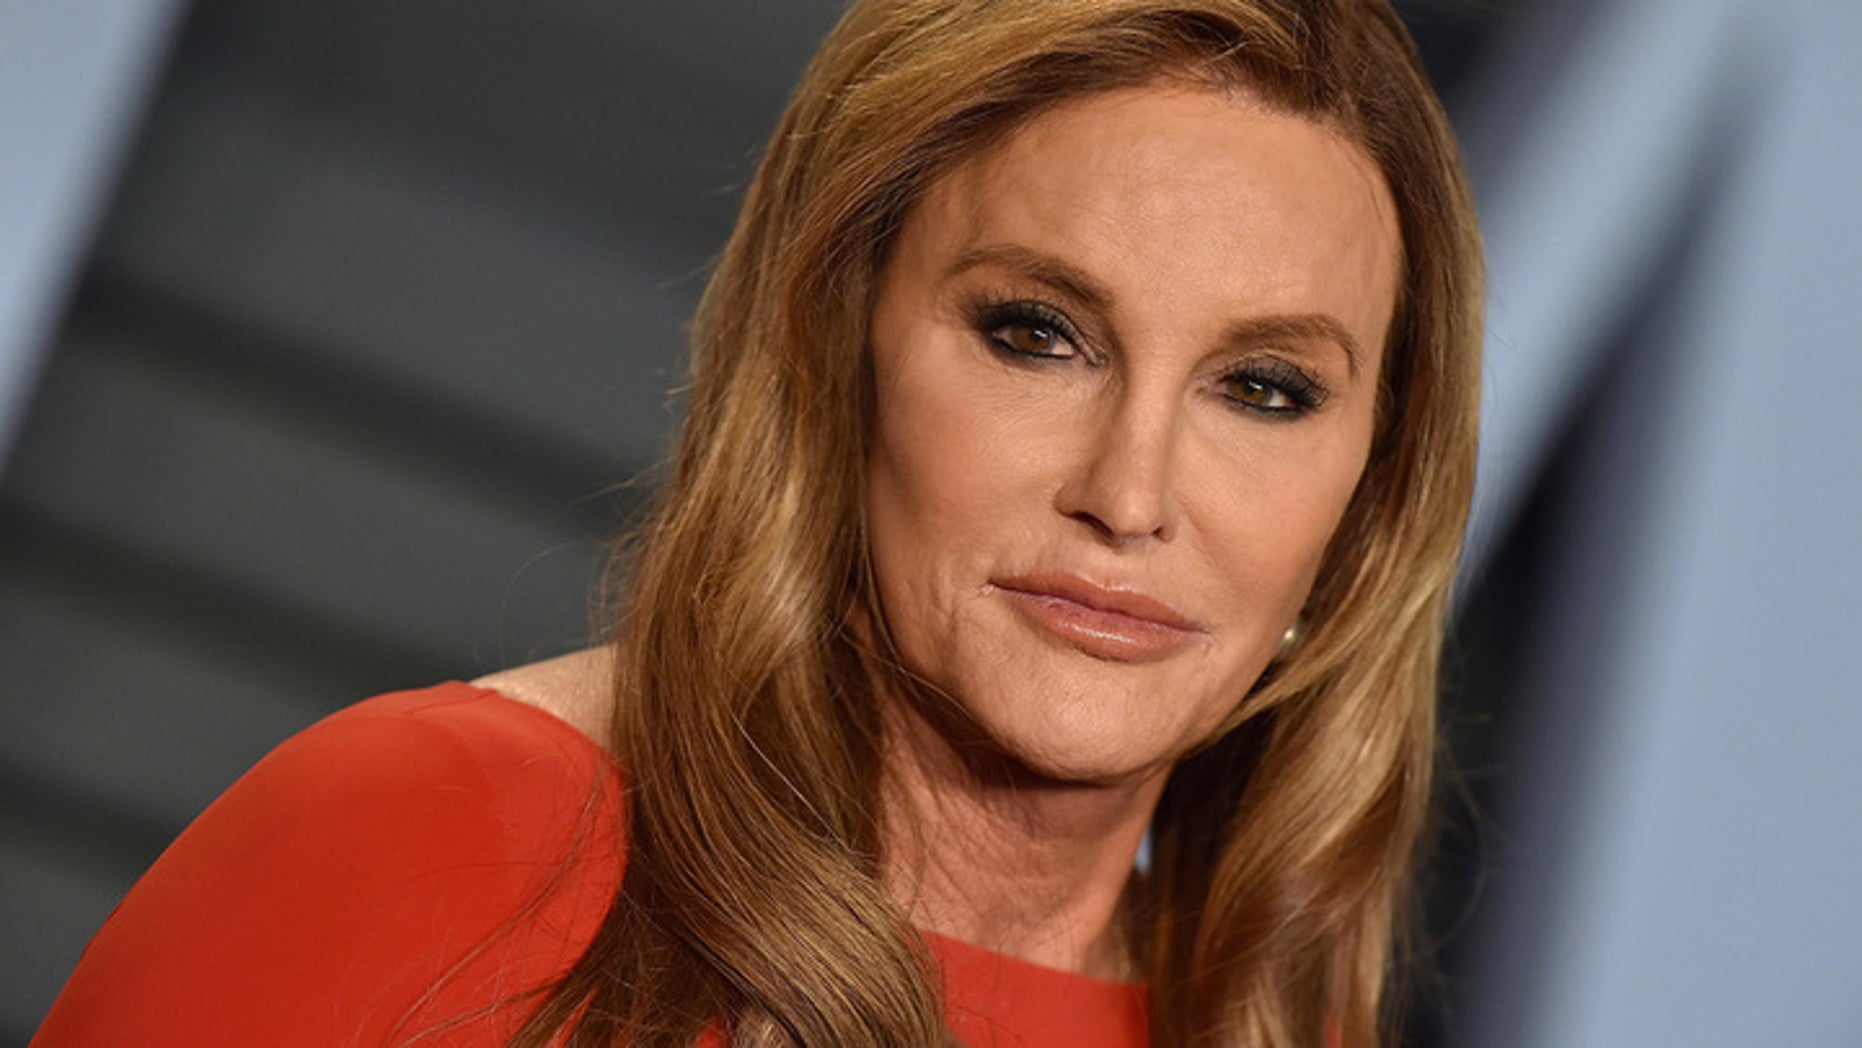 California church draws backlash for sign: ‘Bruce Jenner is still a man’